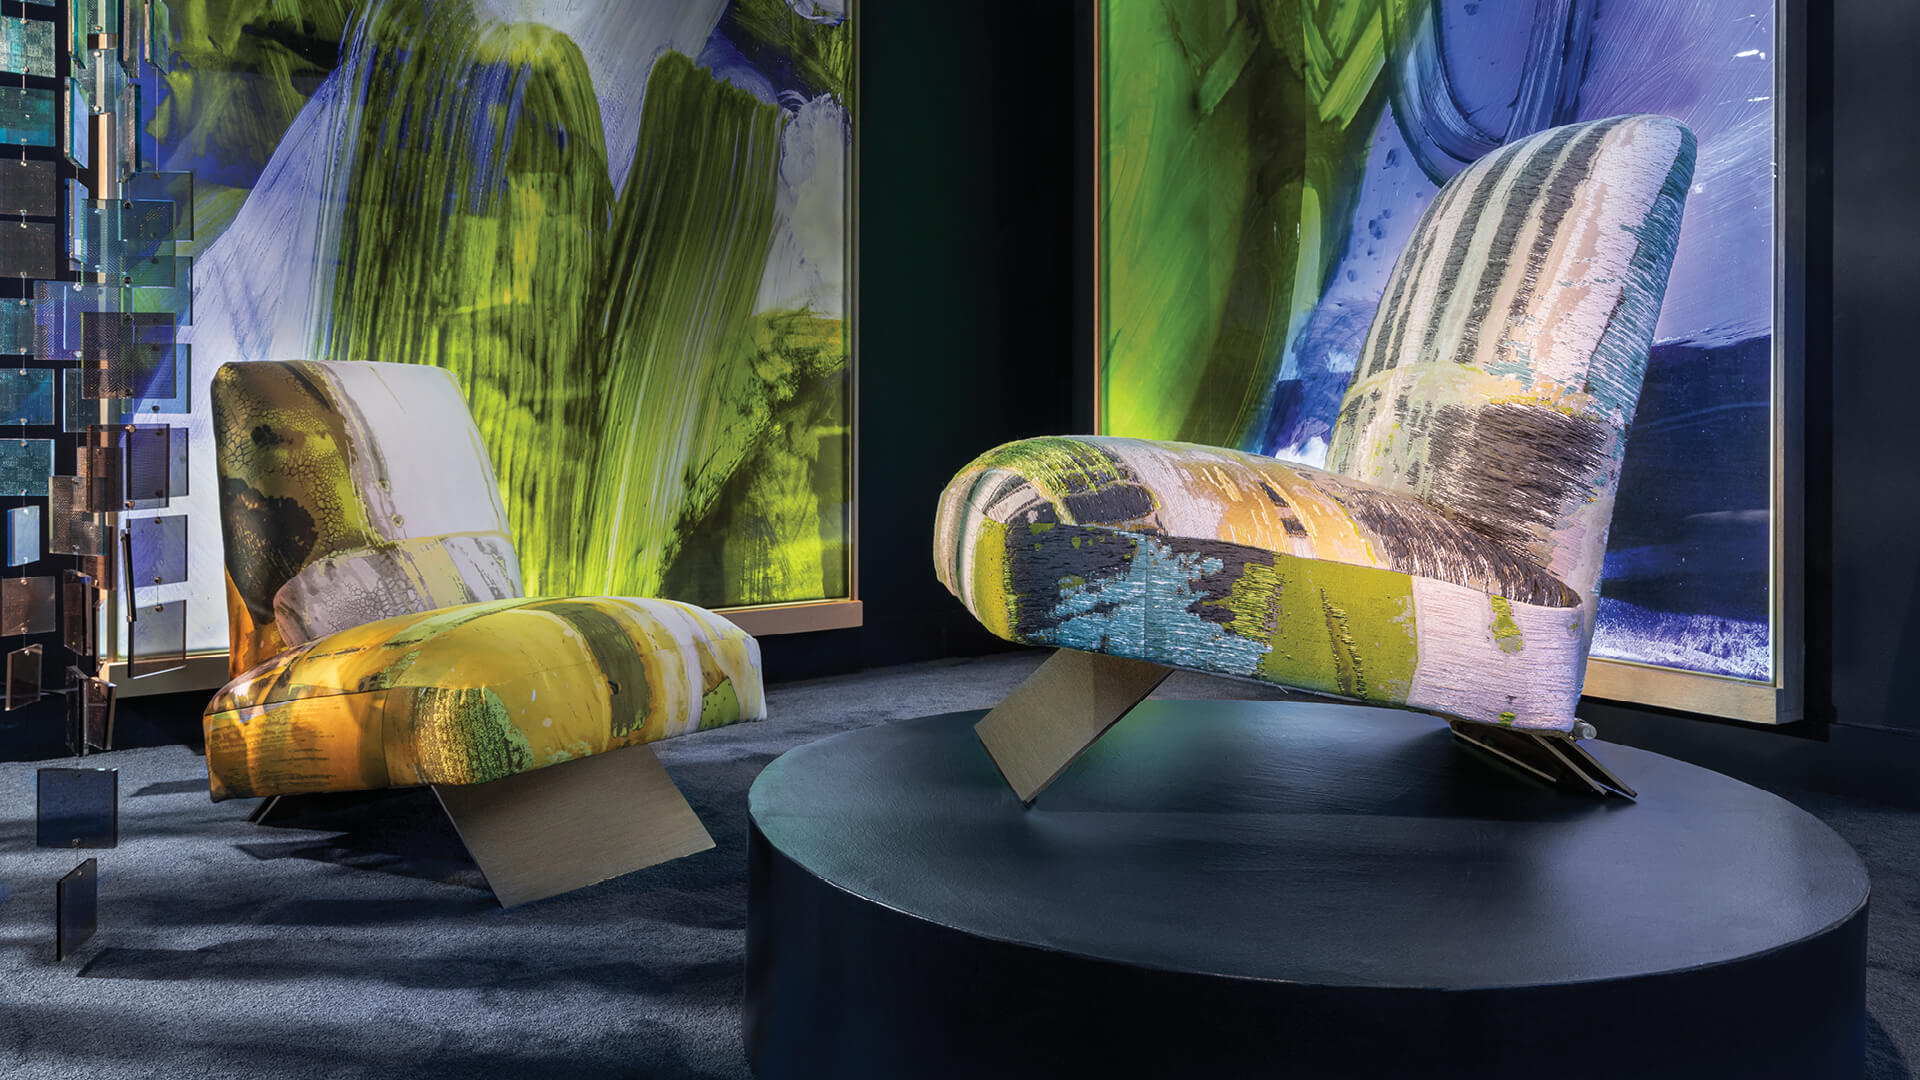 Draga & Aurel paint Wunderkammer in artistic hues with 'Narrazioni Intrecciate'